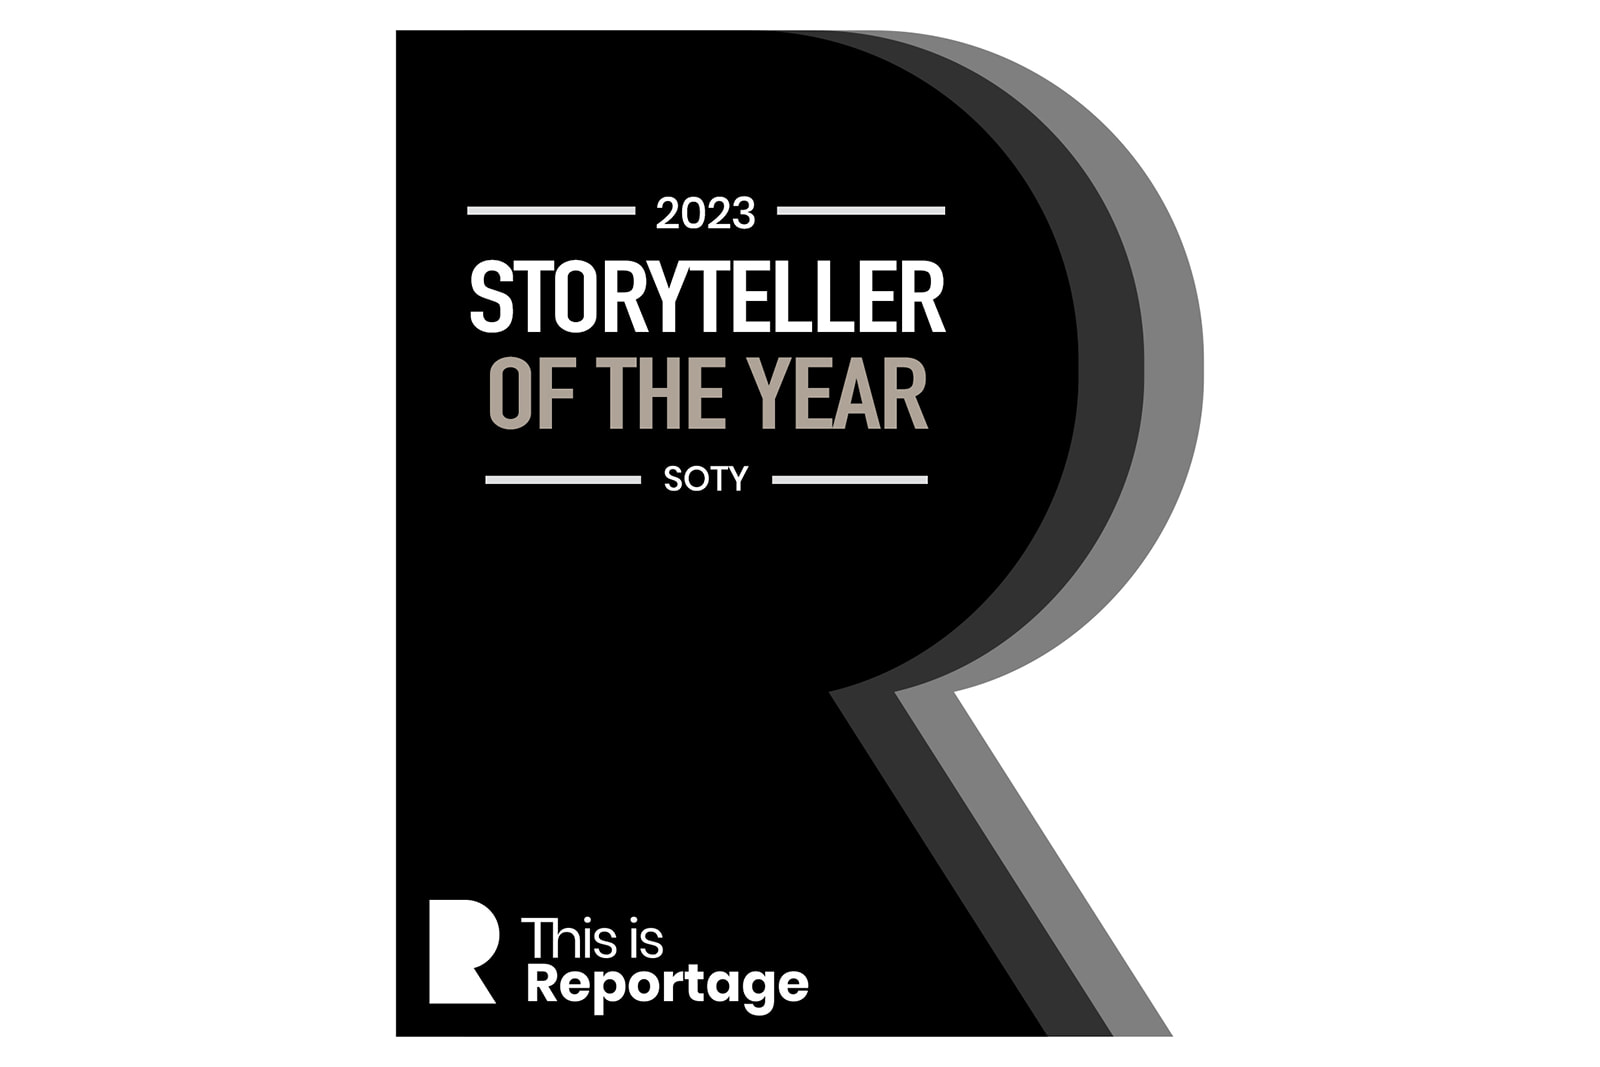 David Scholes Story teller of the year award